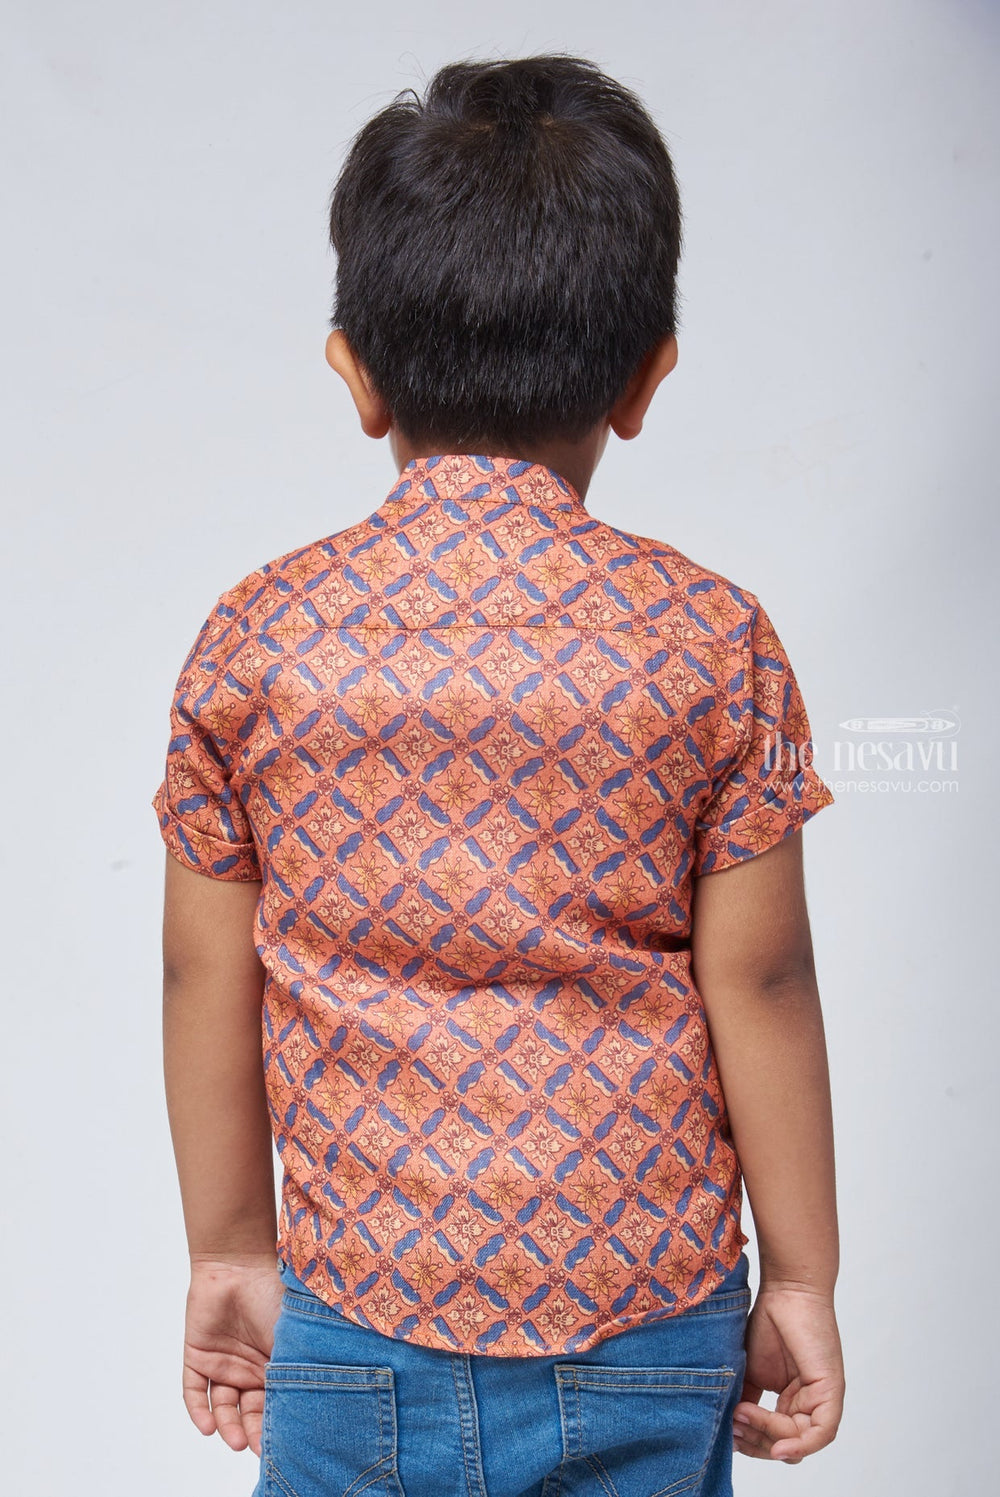 The Nesavu Boys Linen Shirt Authentic Ajrakh Hand Block Print Boys' Shirt: Celebrate Indian Heritage in Style Nesavu Hand Block Printed Shirt for Boys | Boys Casual Wear | The Nesavu